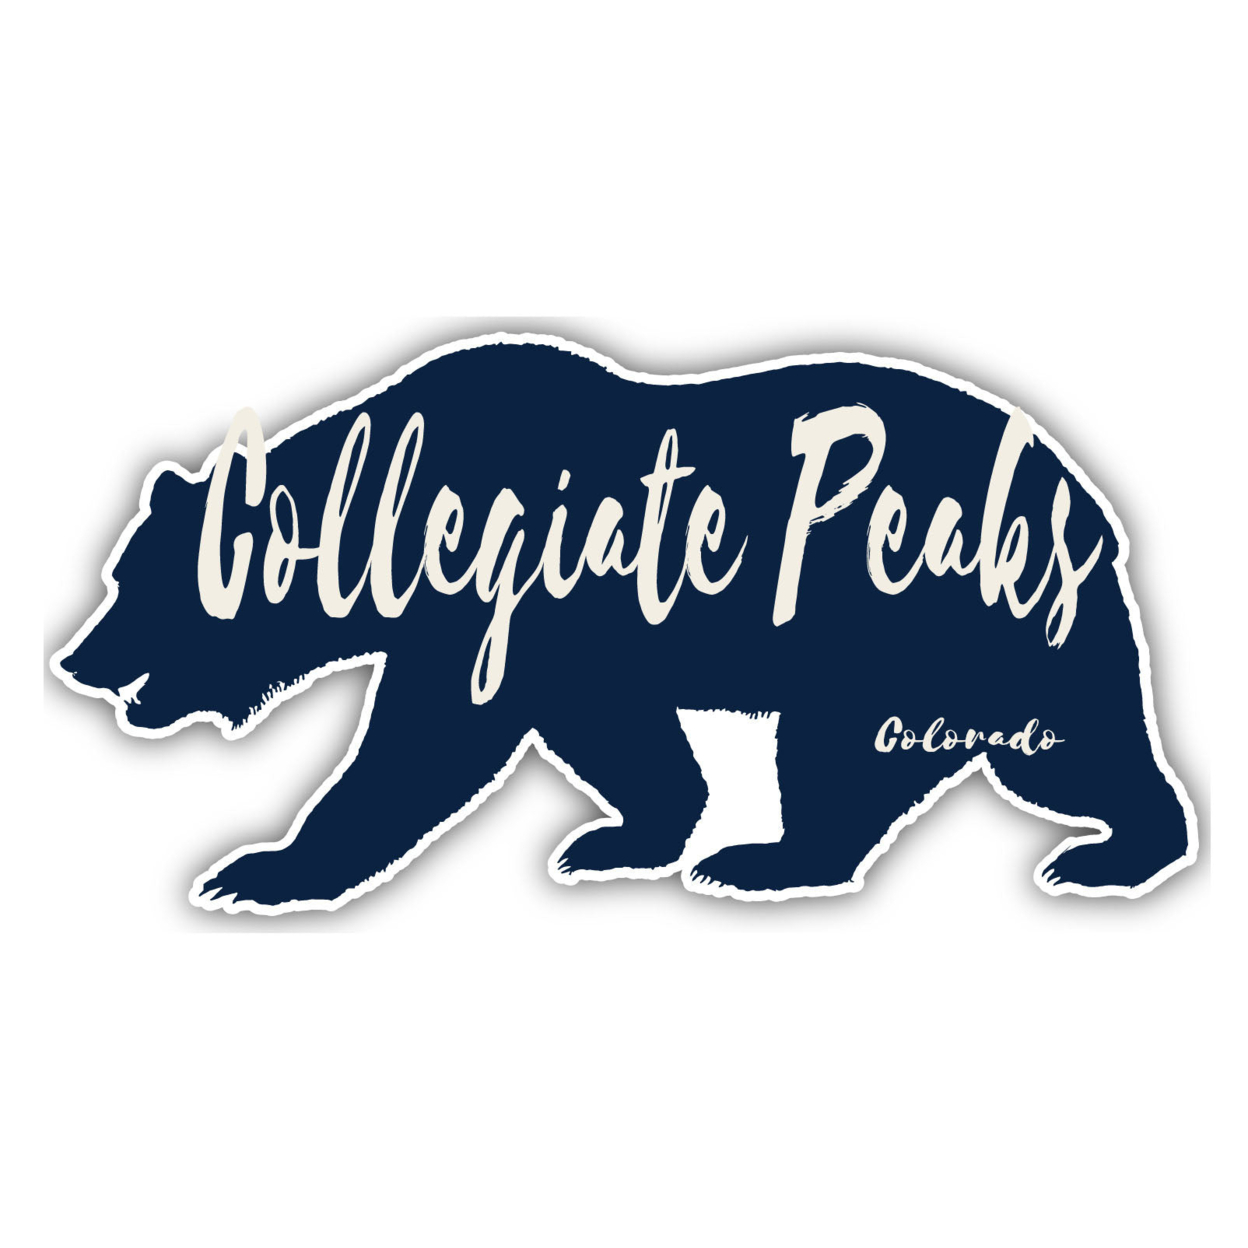 Collegiate Peaks Colorado Souvenir Decorative Stickers (Choose Theme And Size) - Single Unit, 8-Inch, Camp Life